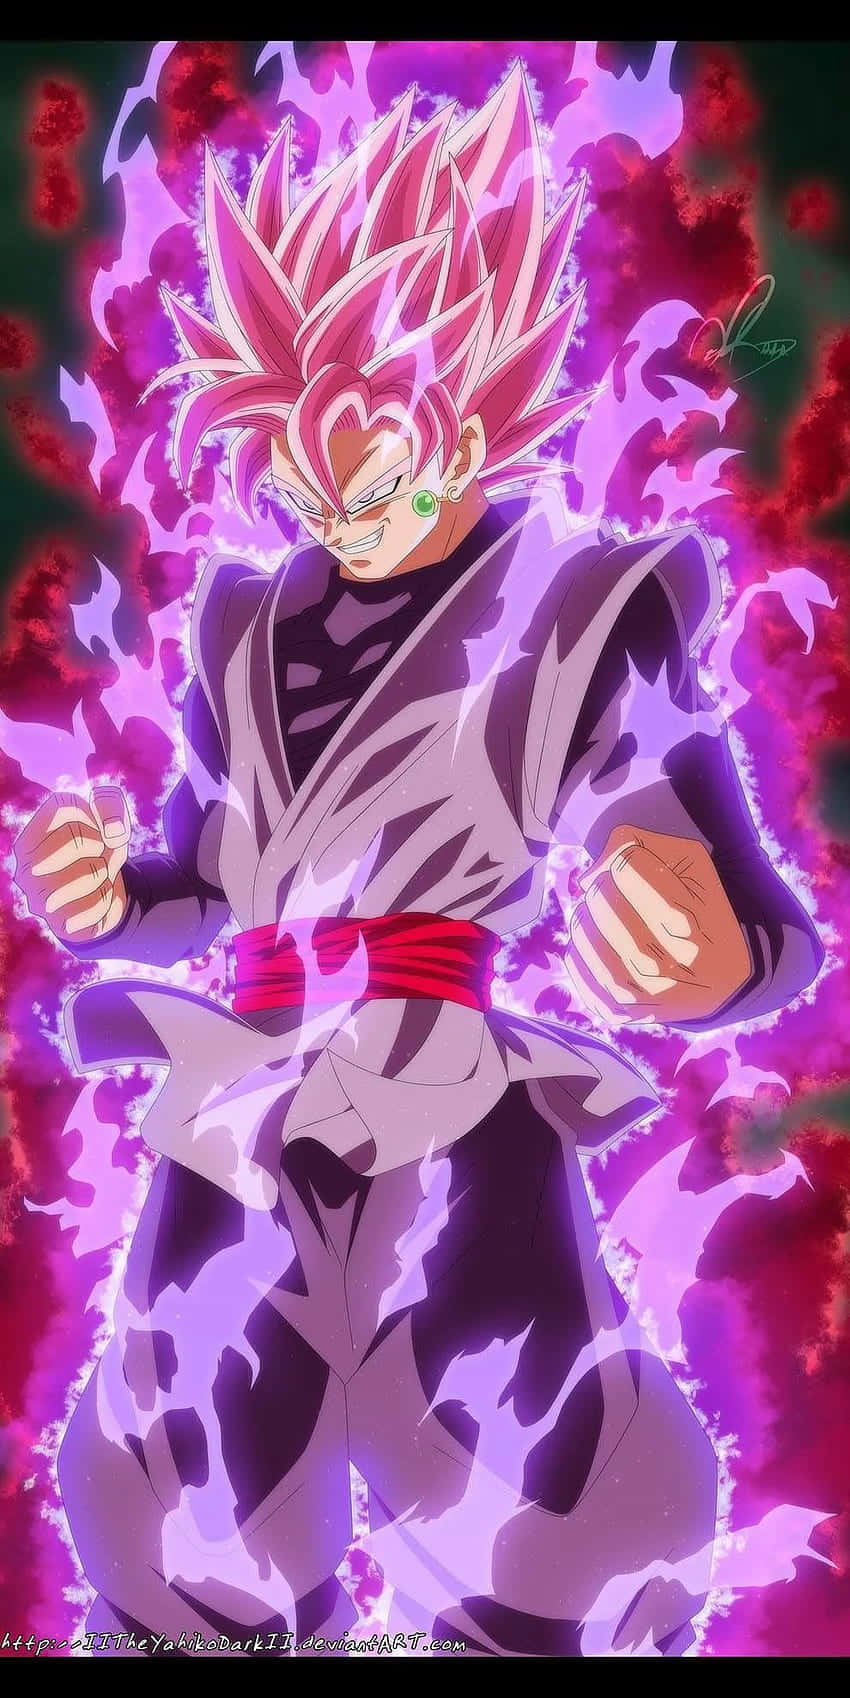 Misteriosoy Poderoso Goku Black En Su Postura Feroz.